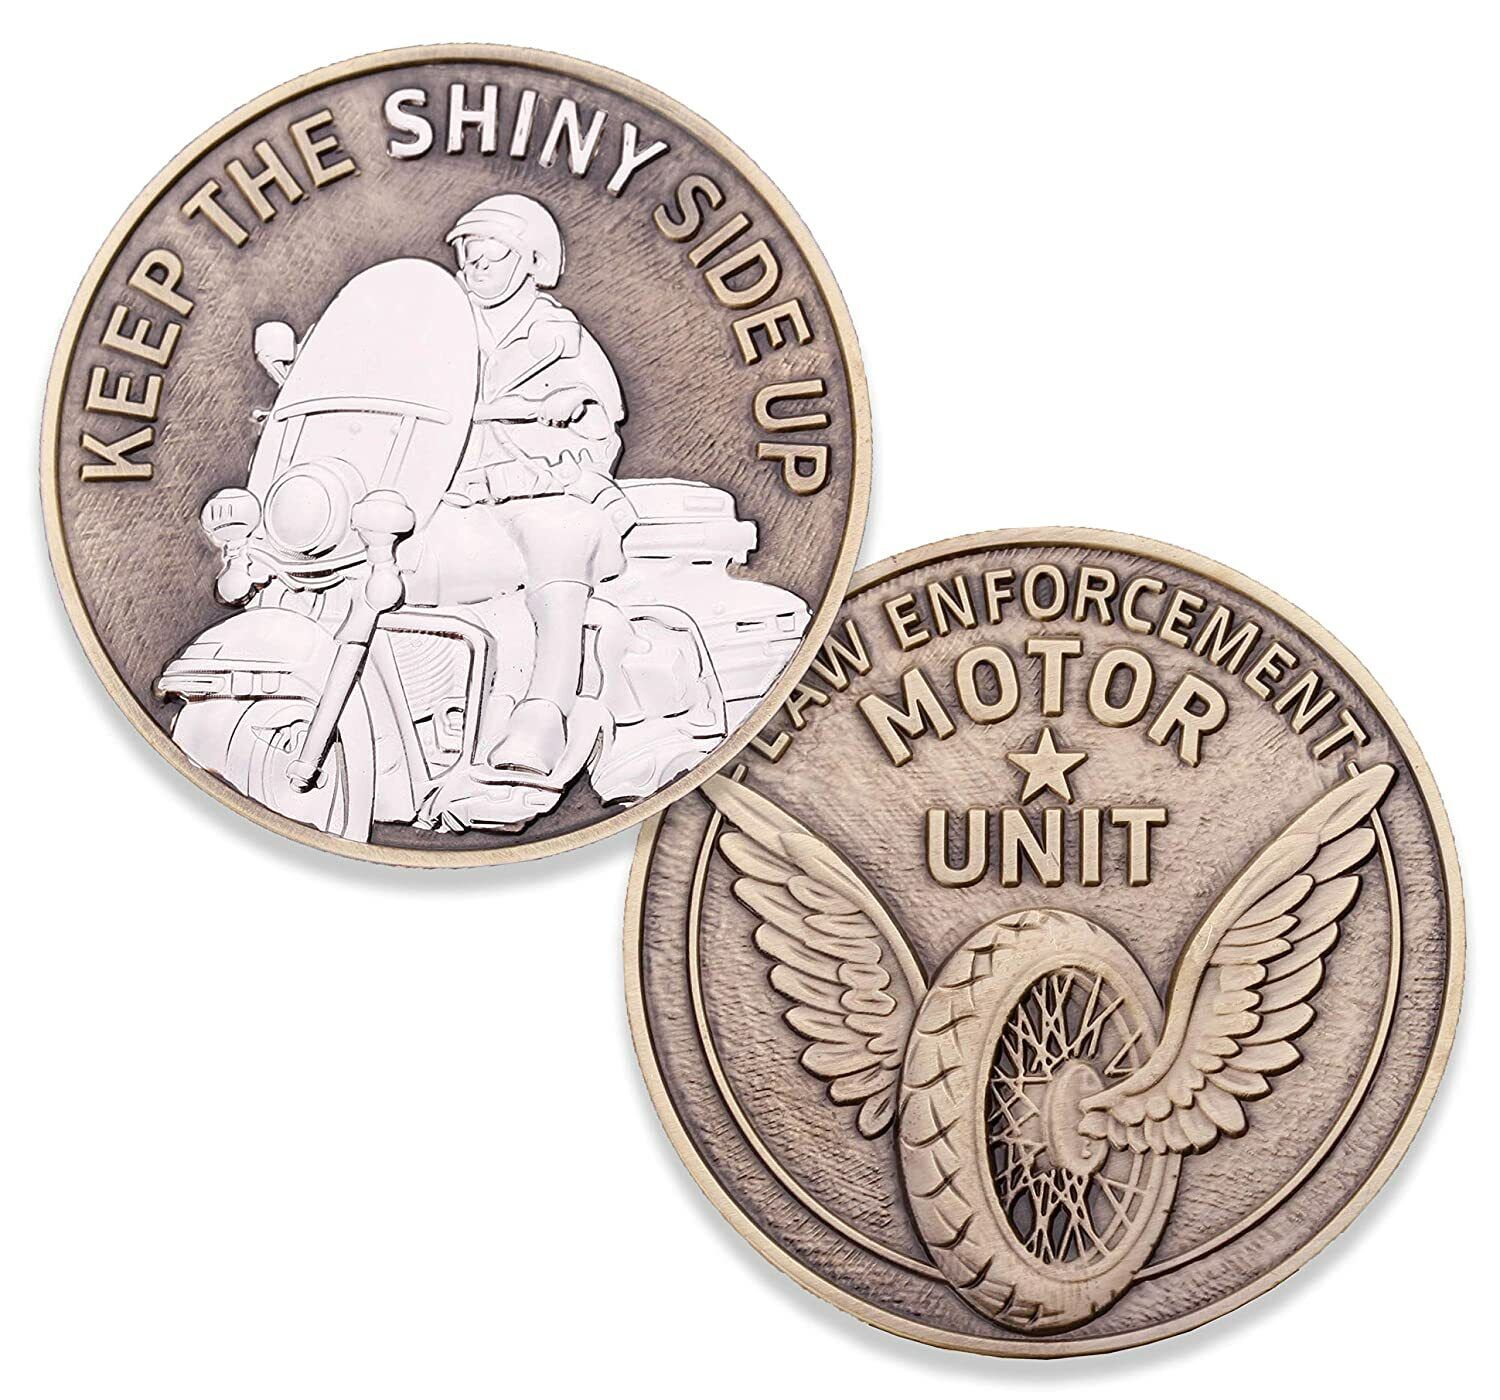 Law Enforcement Motorcycle Unit Challenge Coin